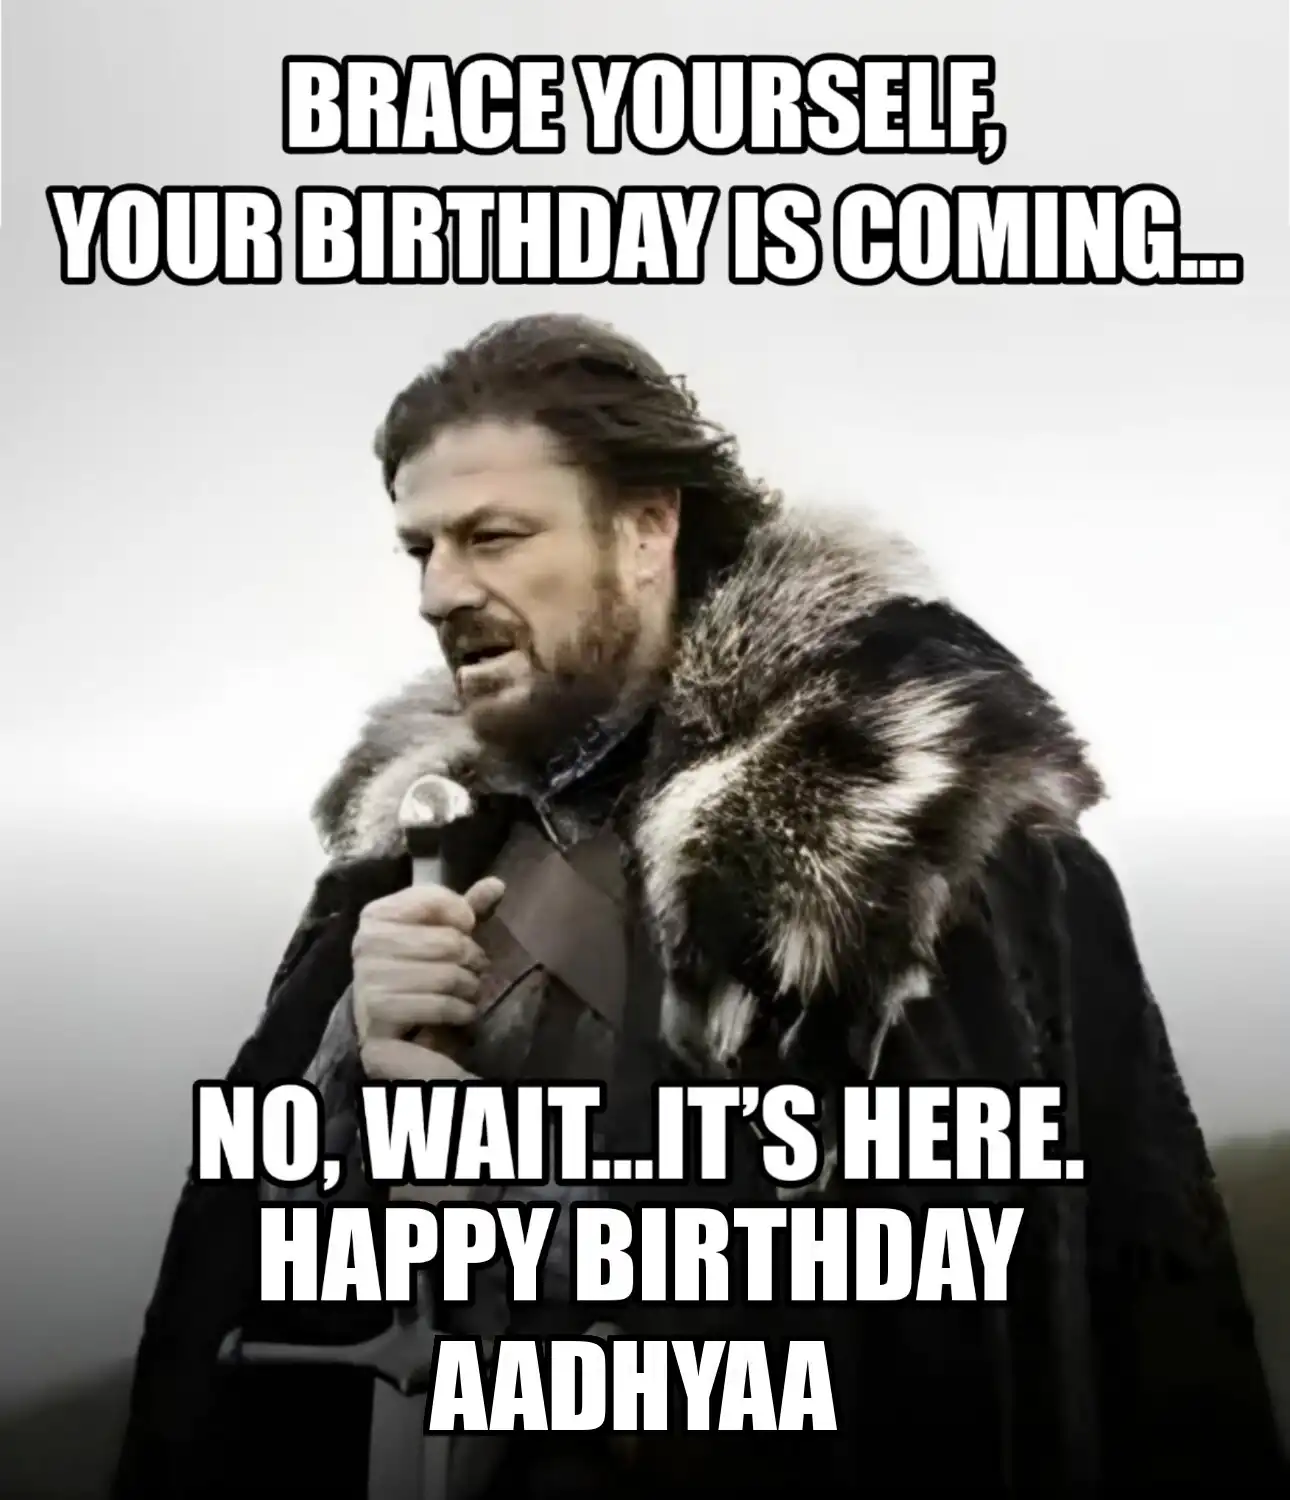 Happy Birthday Aadhyaa Brace Yourself Your Birthday Is Coming Meme